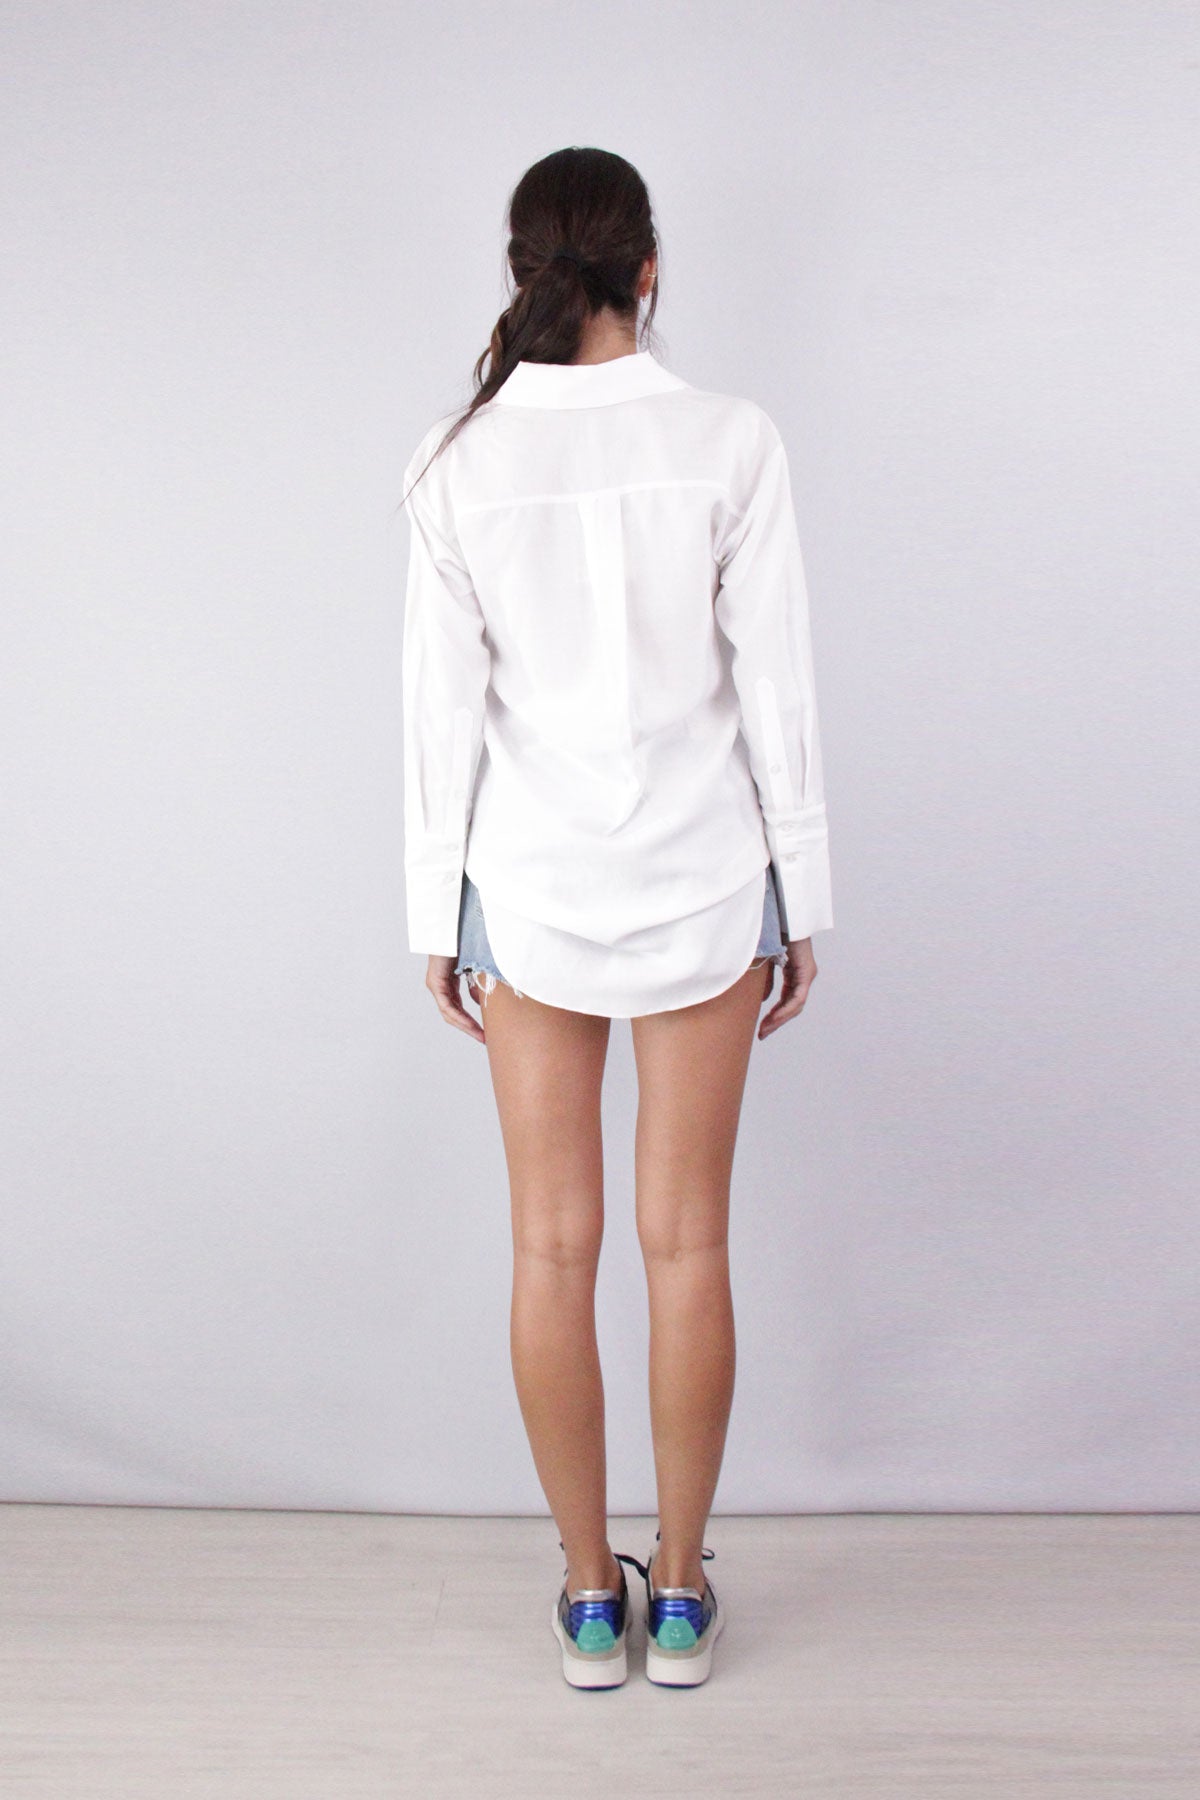 Illion Classic Shirt in White - shop-olivia.com